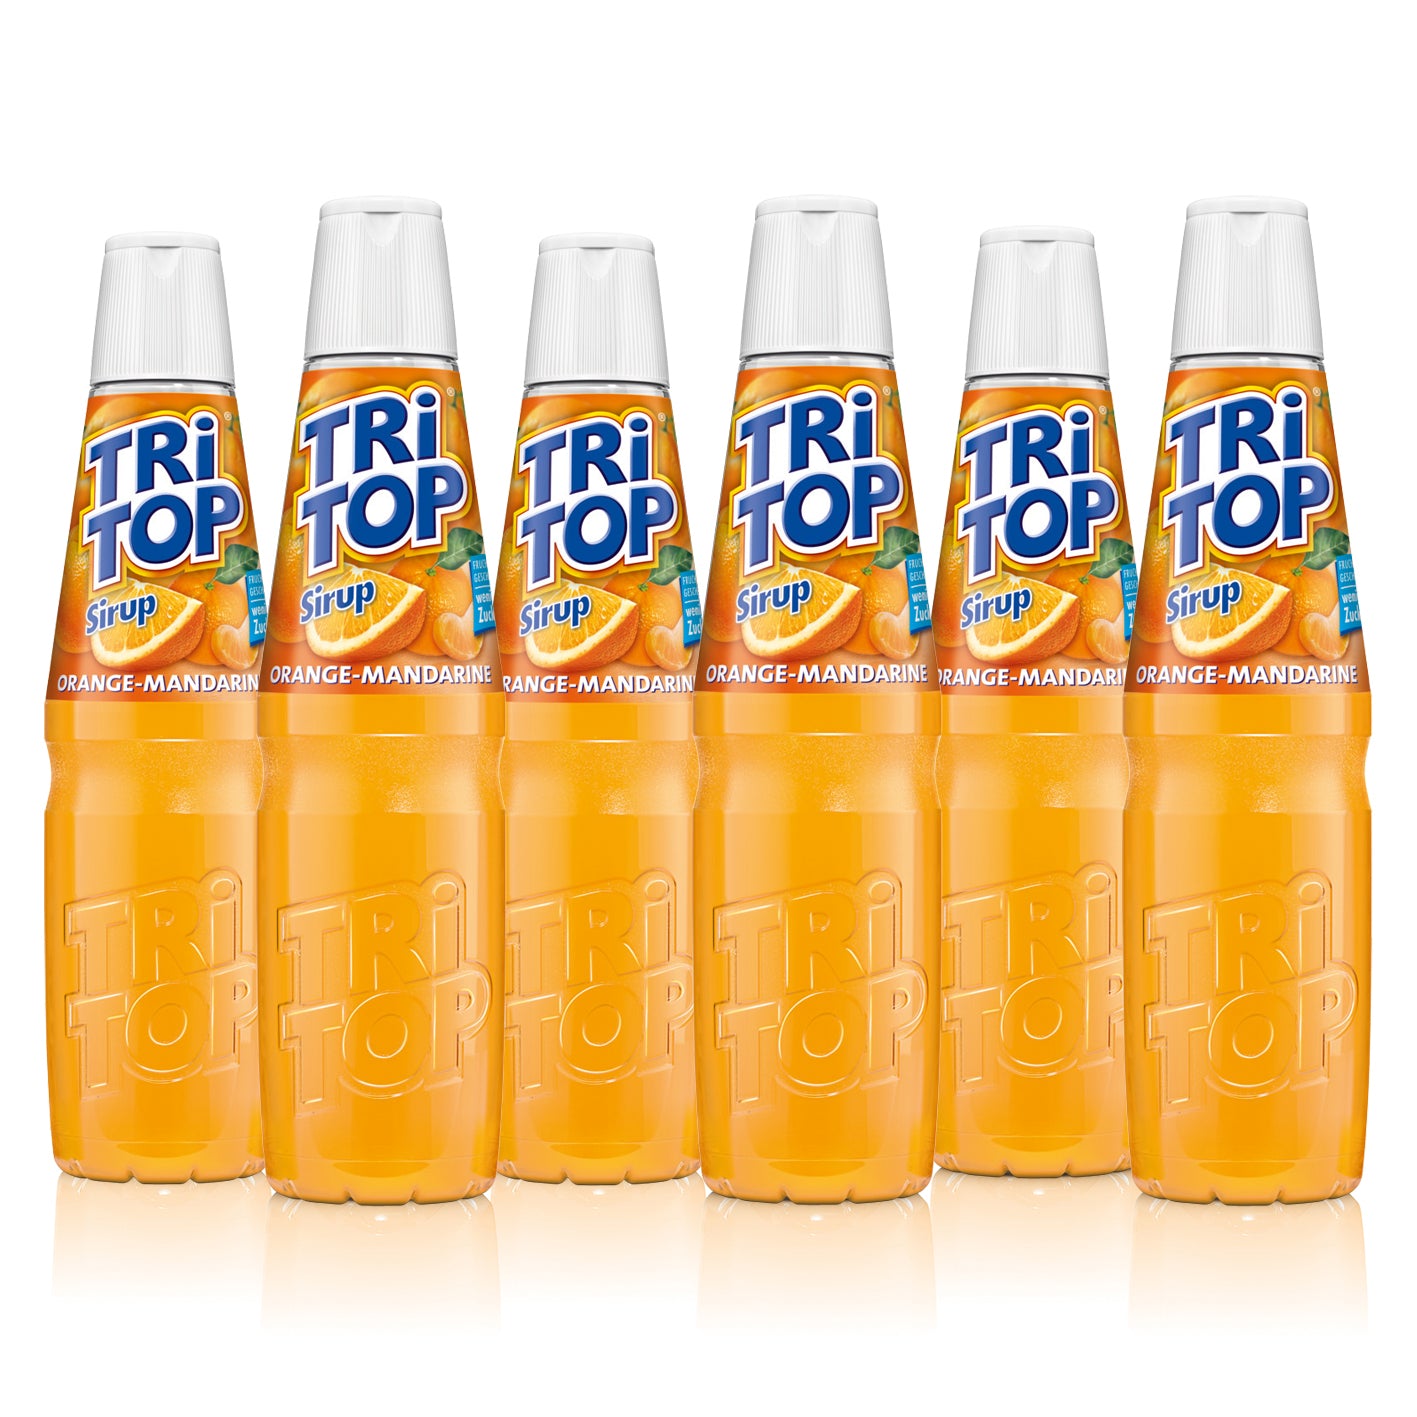 TRi TOP Sirup Orange-Mandarine 6er-Set - 6x 600 ml